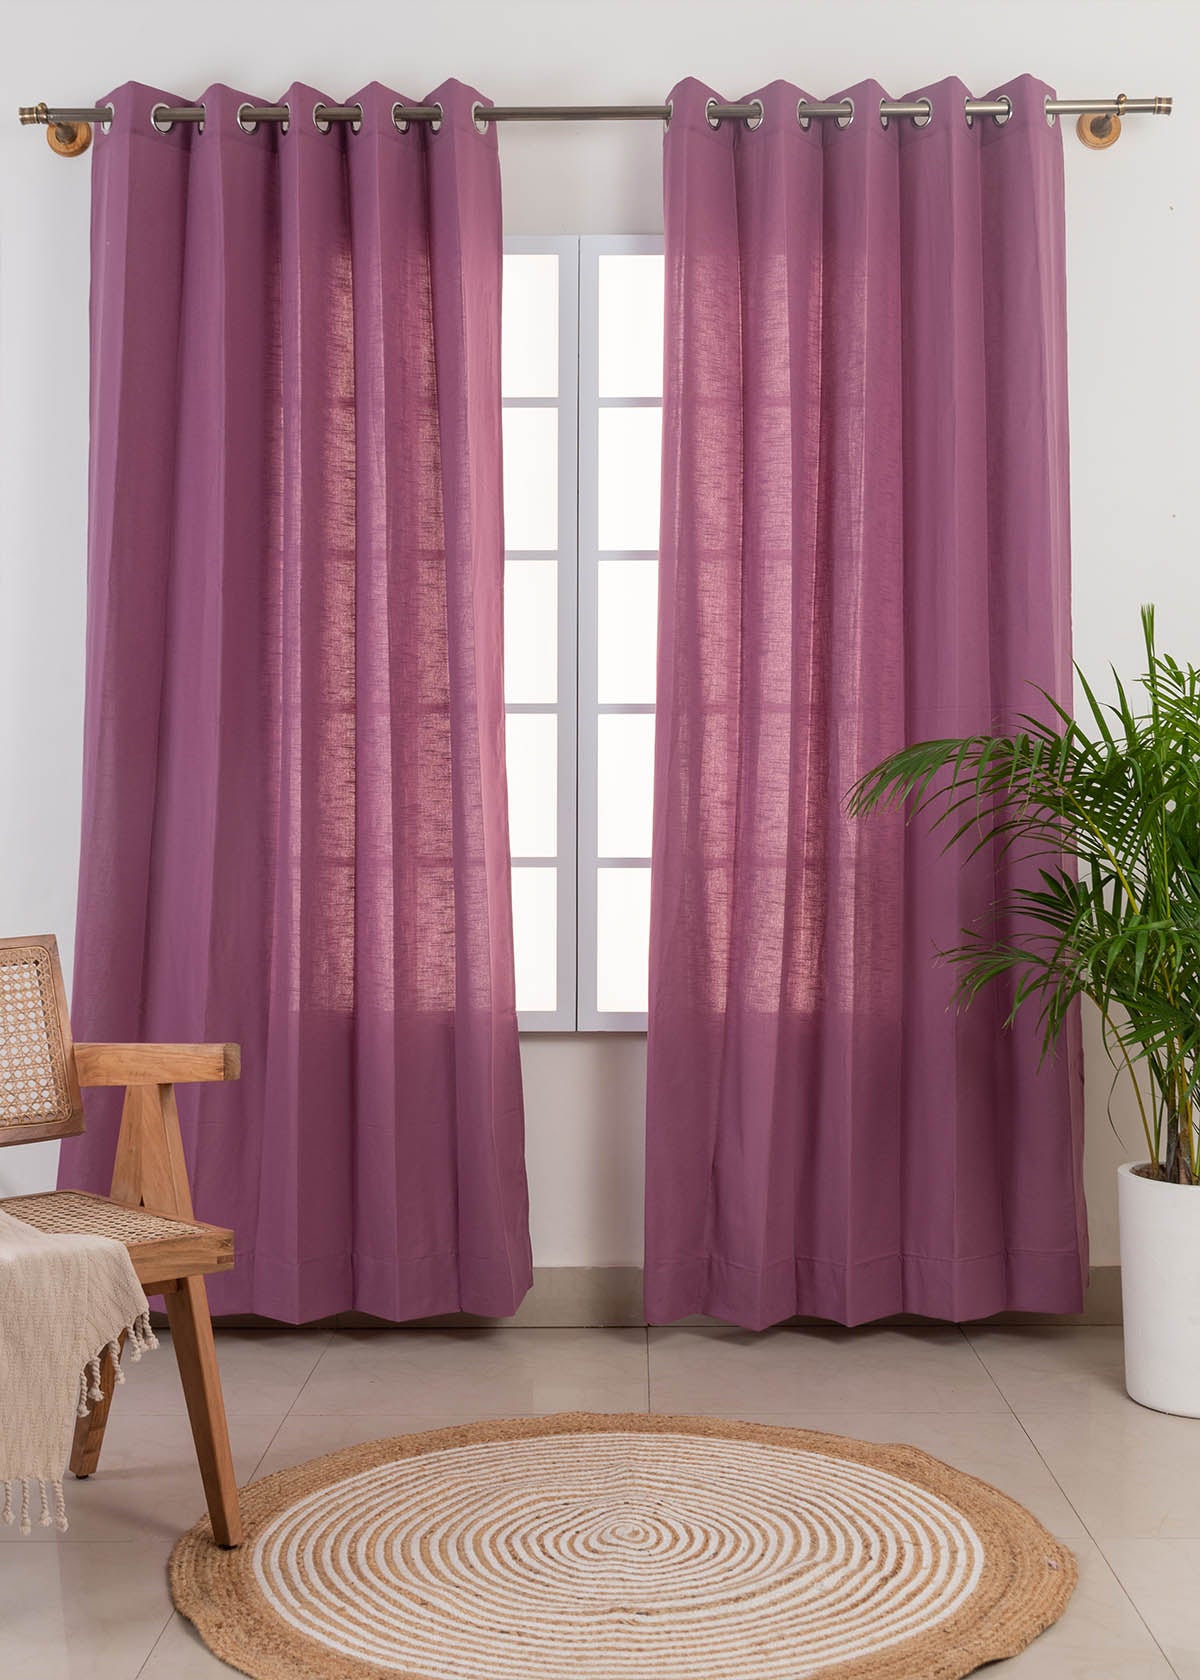 Solid Grape 100% Customizable Cotton plain curtain for bedroom - Room darkening